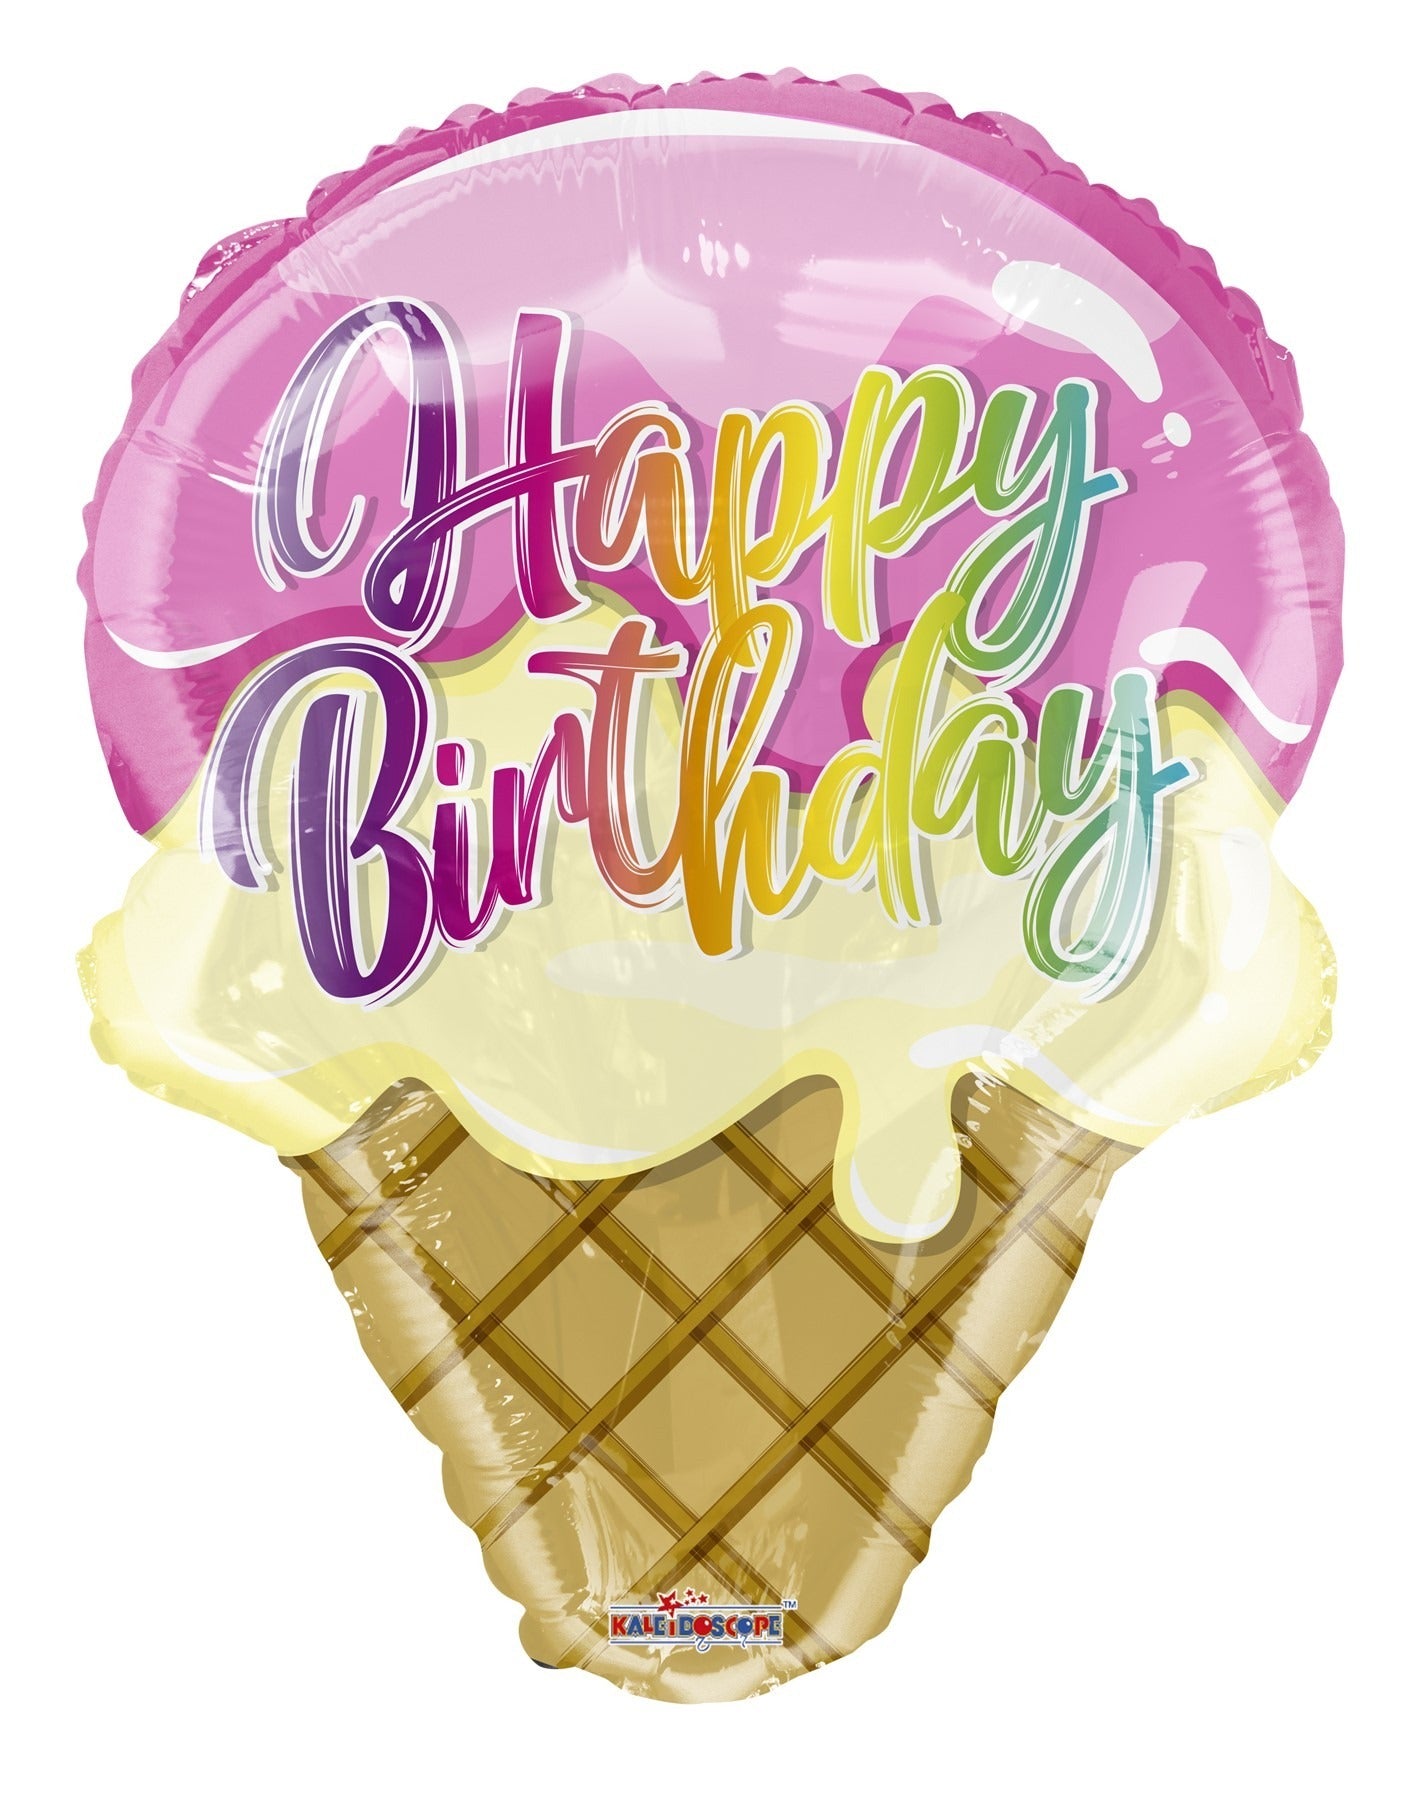 View Happy Birthday Ice Cream Cone Balloon 18 Inch information